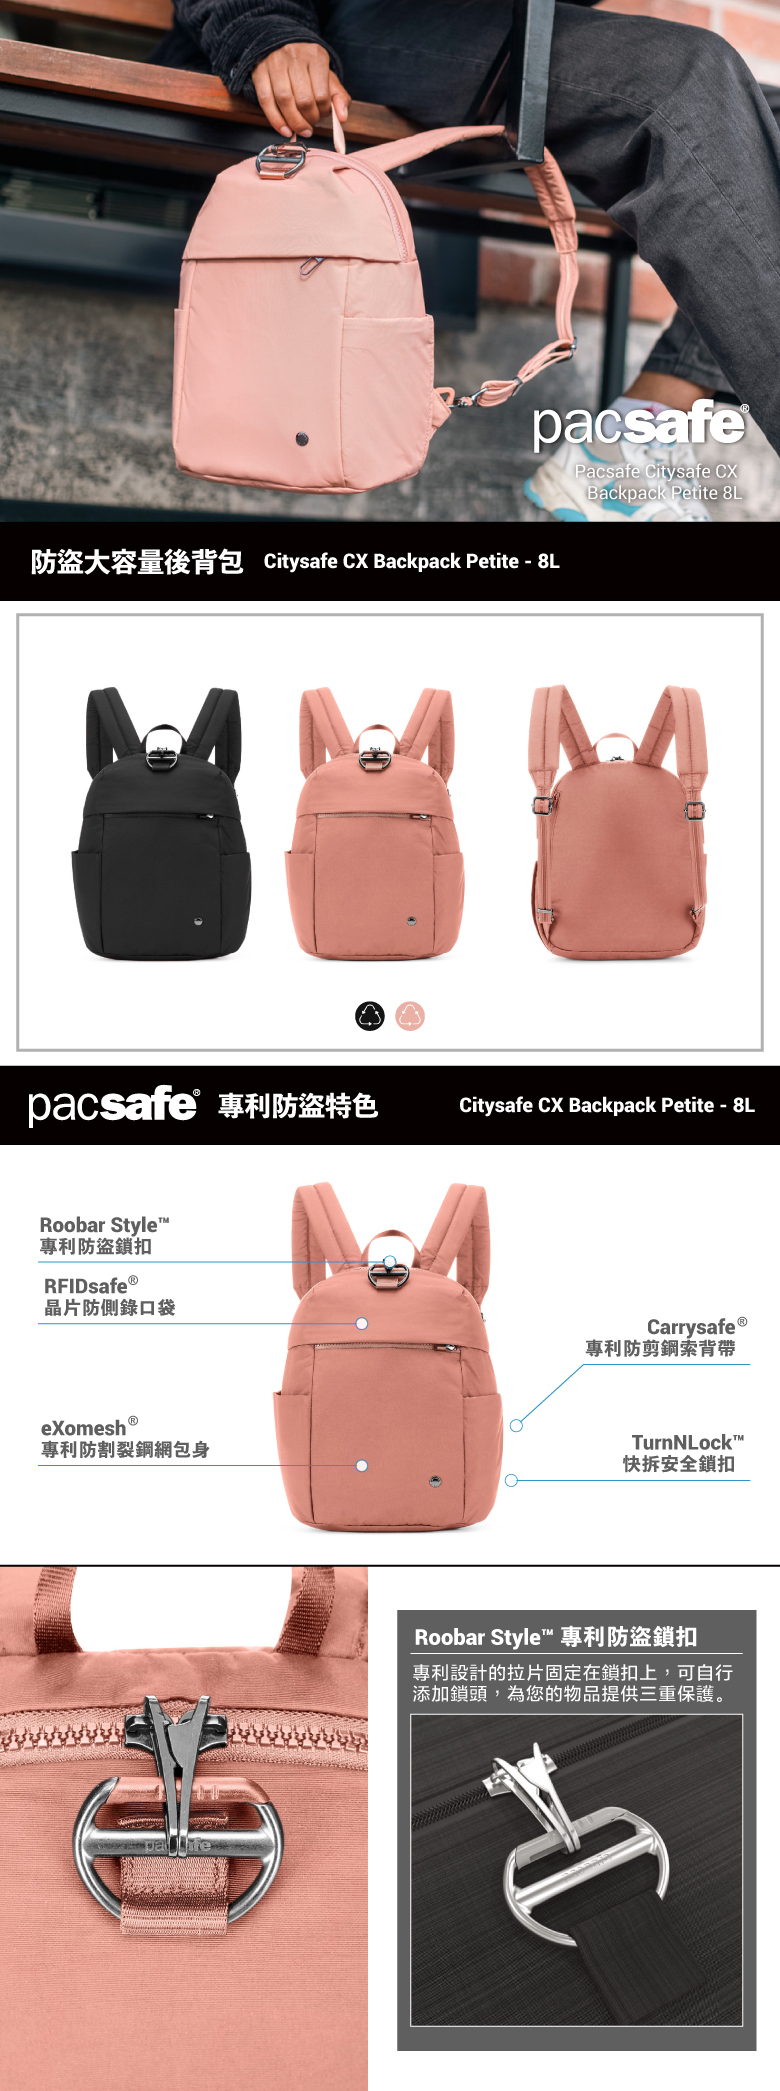 Pacsafe Citysafe® CX Anti-Theft 8L Backpack Petite Black 20422138